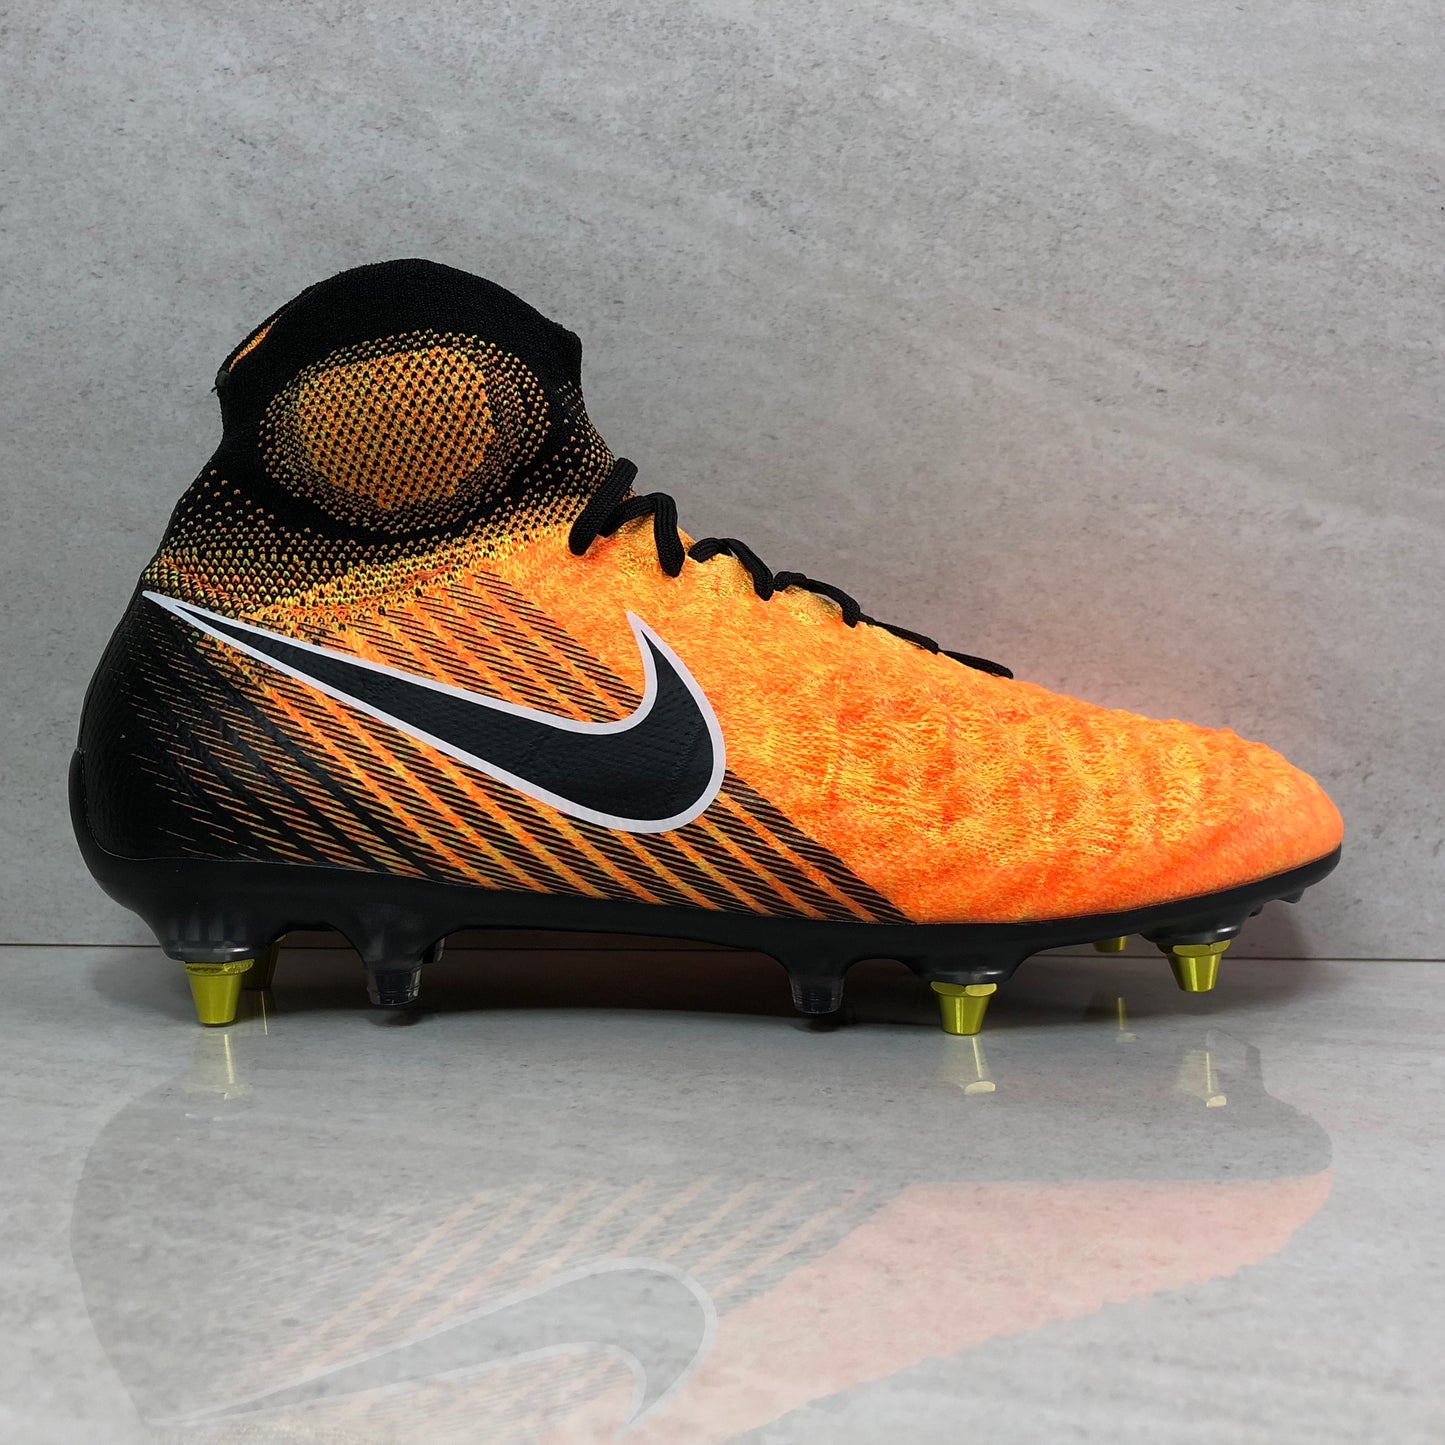 Nike Magista Obra II SG Pro - 869482 802 - Botas de fútbol para hombre Talla 8/9 Laser Naranja Negro Blanco